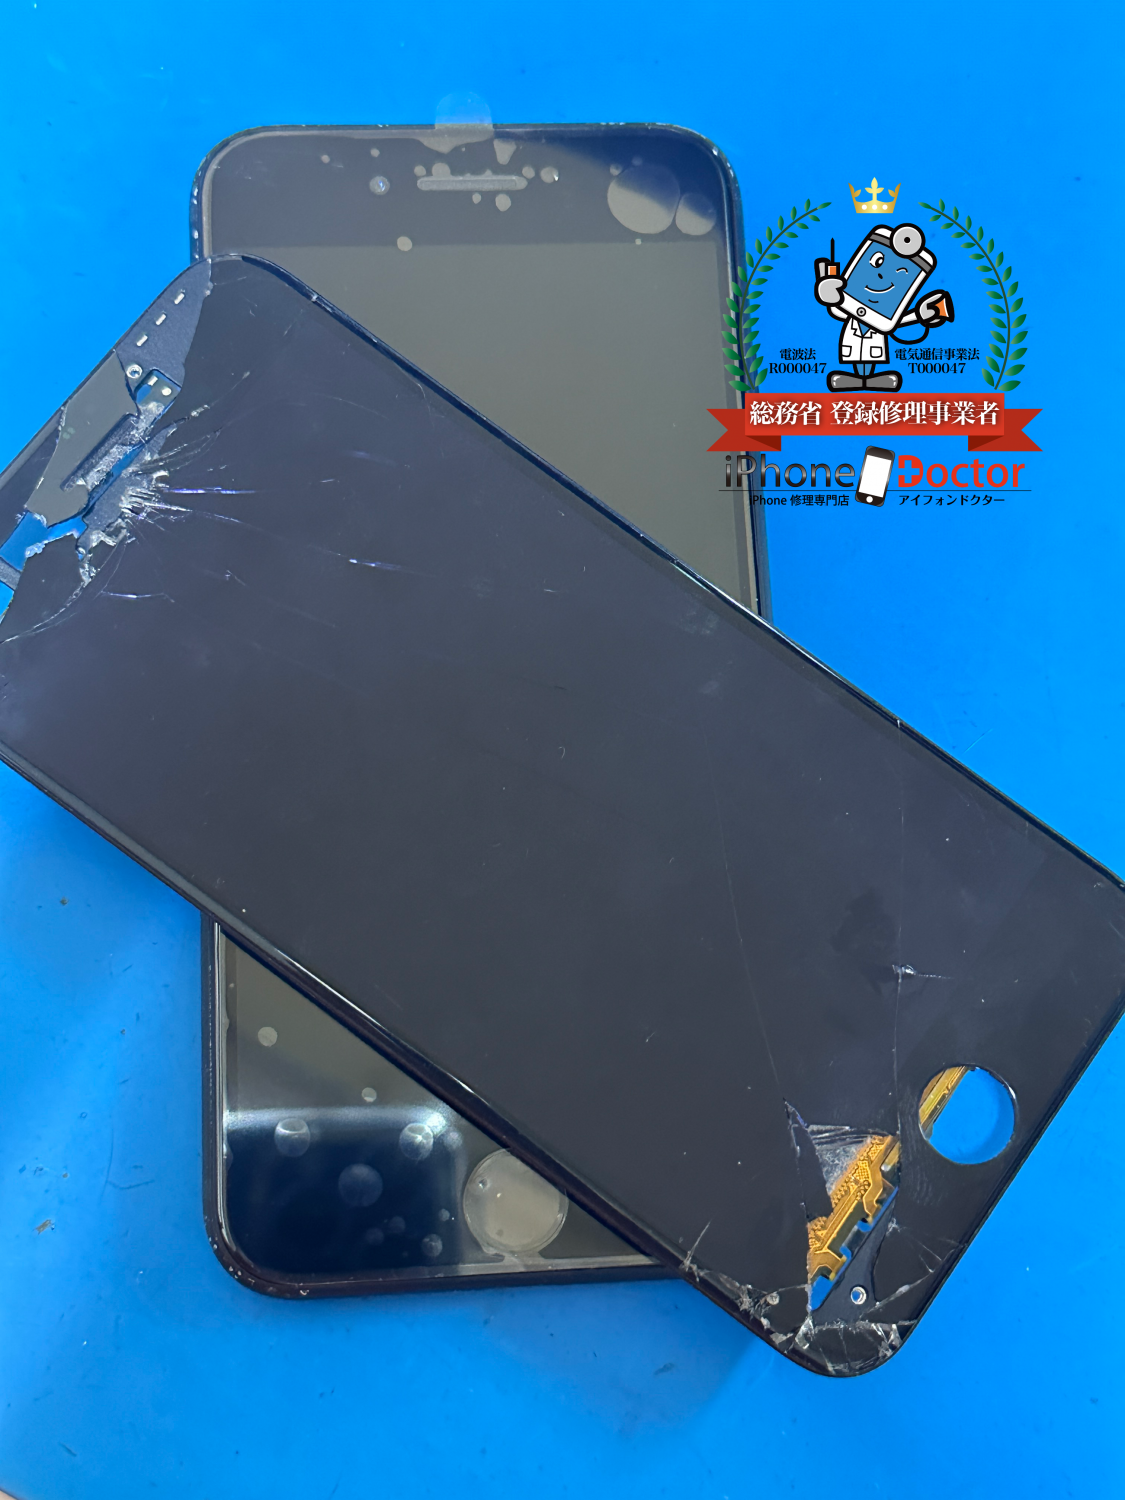 iPhoneSE3ガラス割れ、液晶破損修理